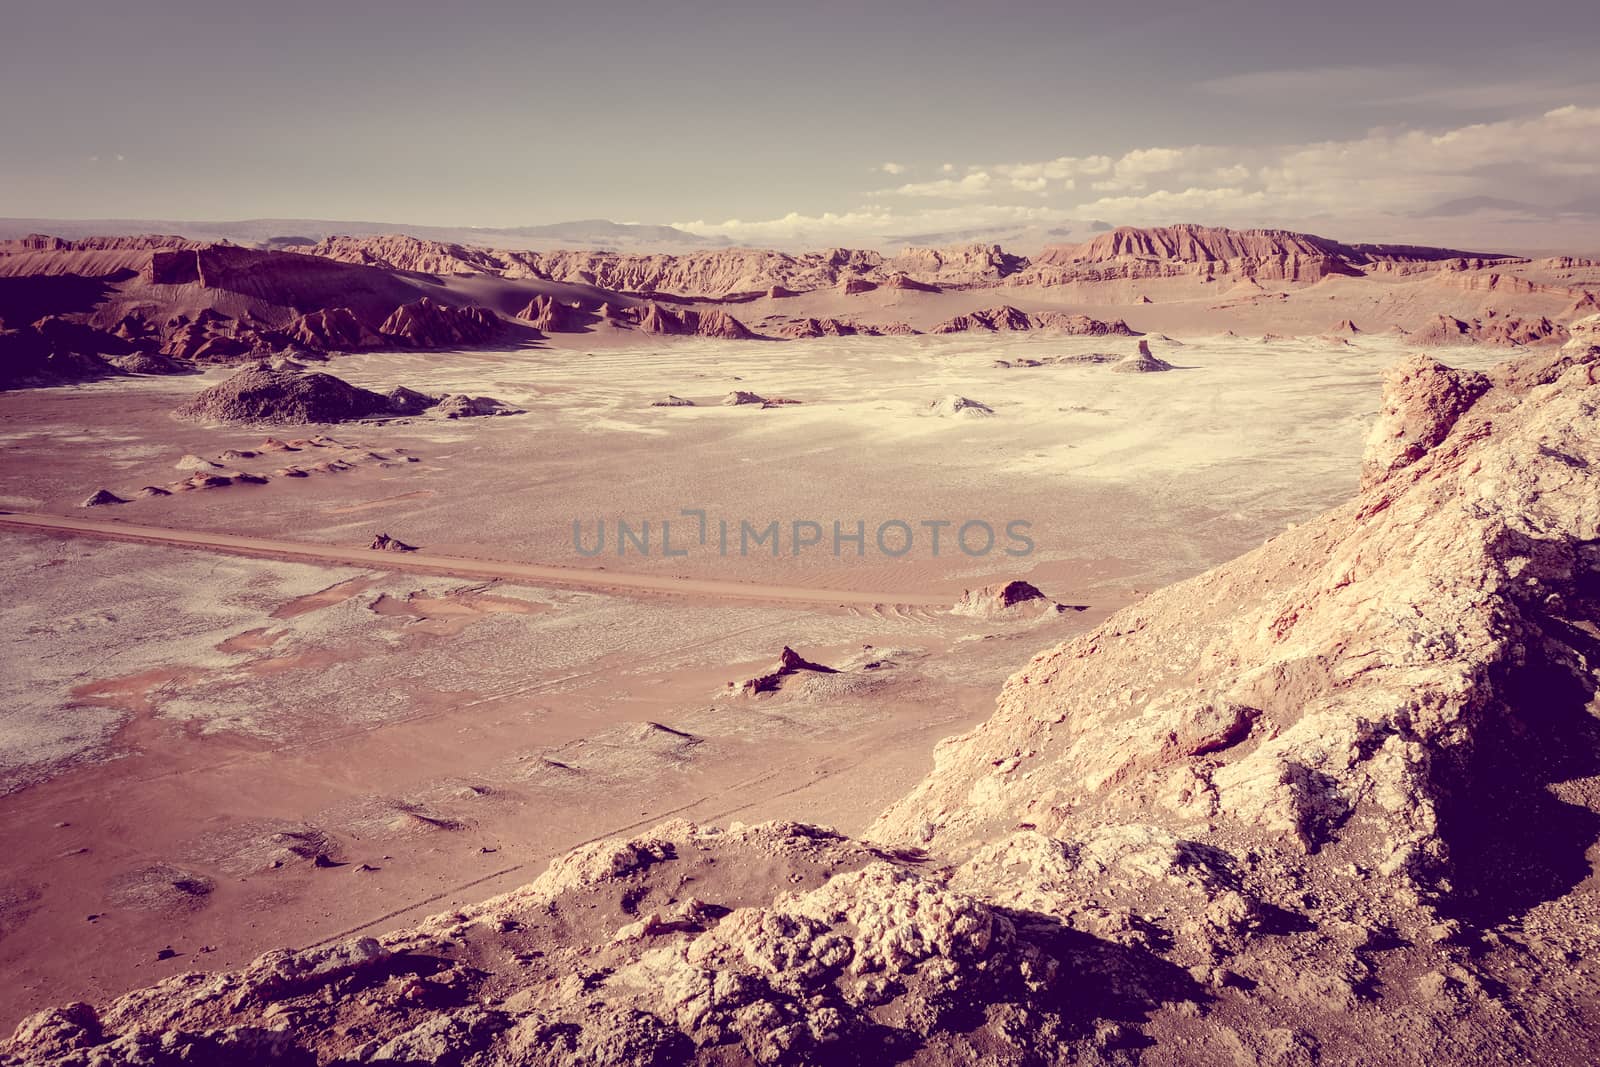 Valle de la Luna landscape in San Pedro de Atacama, Chile